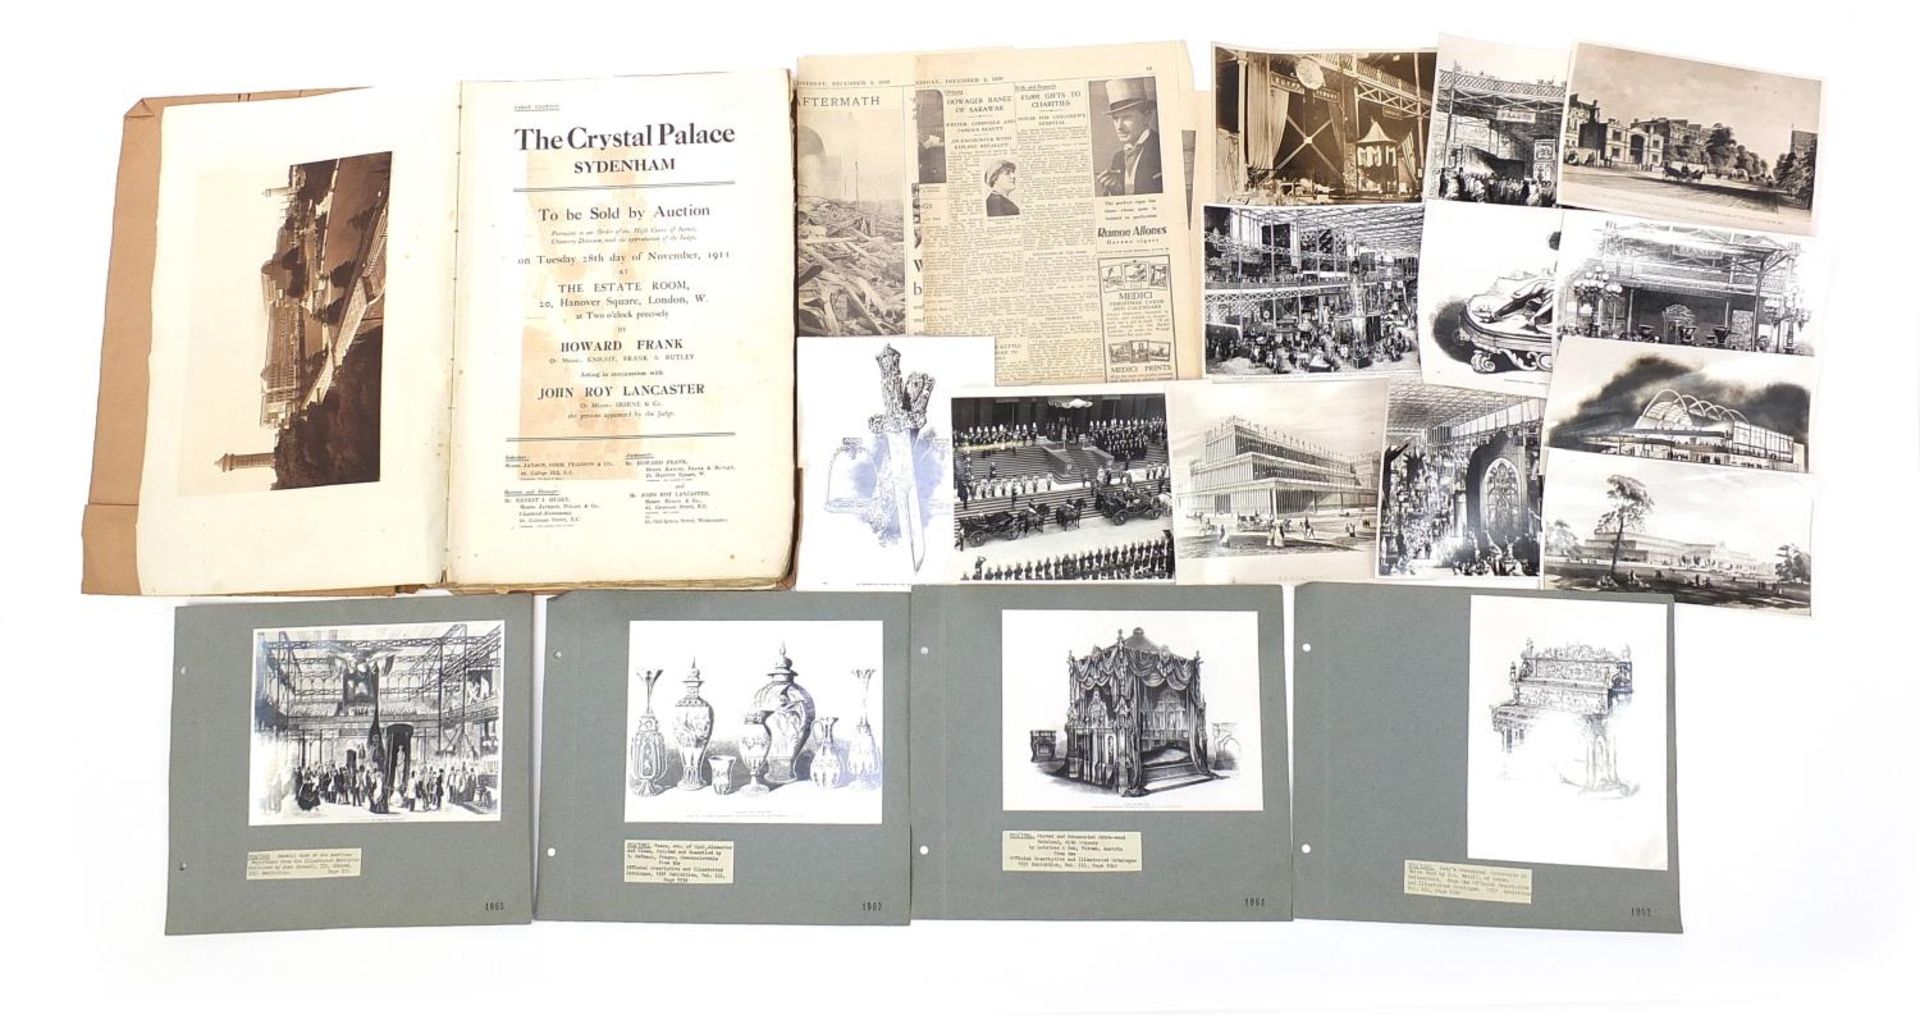 Early 20th century Crystal Palace Exhibition ephemera including Sydenham 1911 Auction Catalogue,